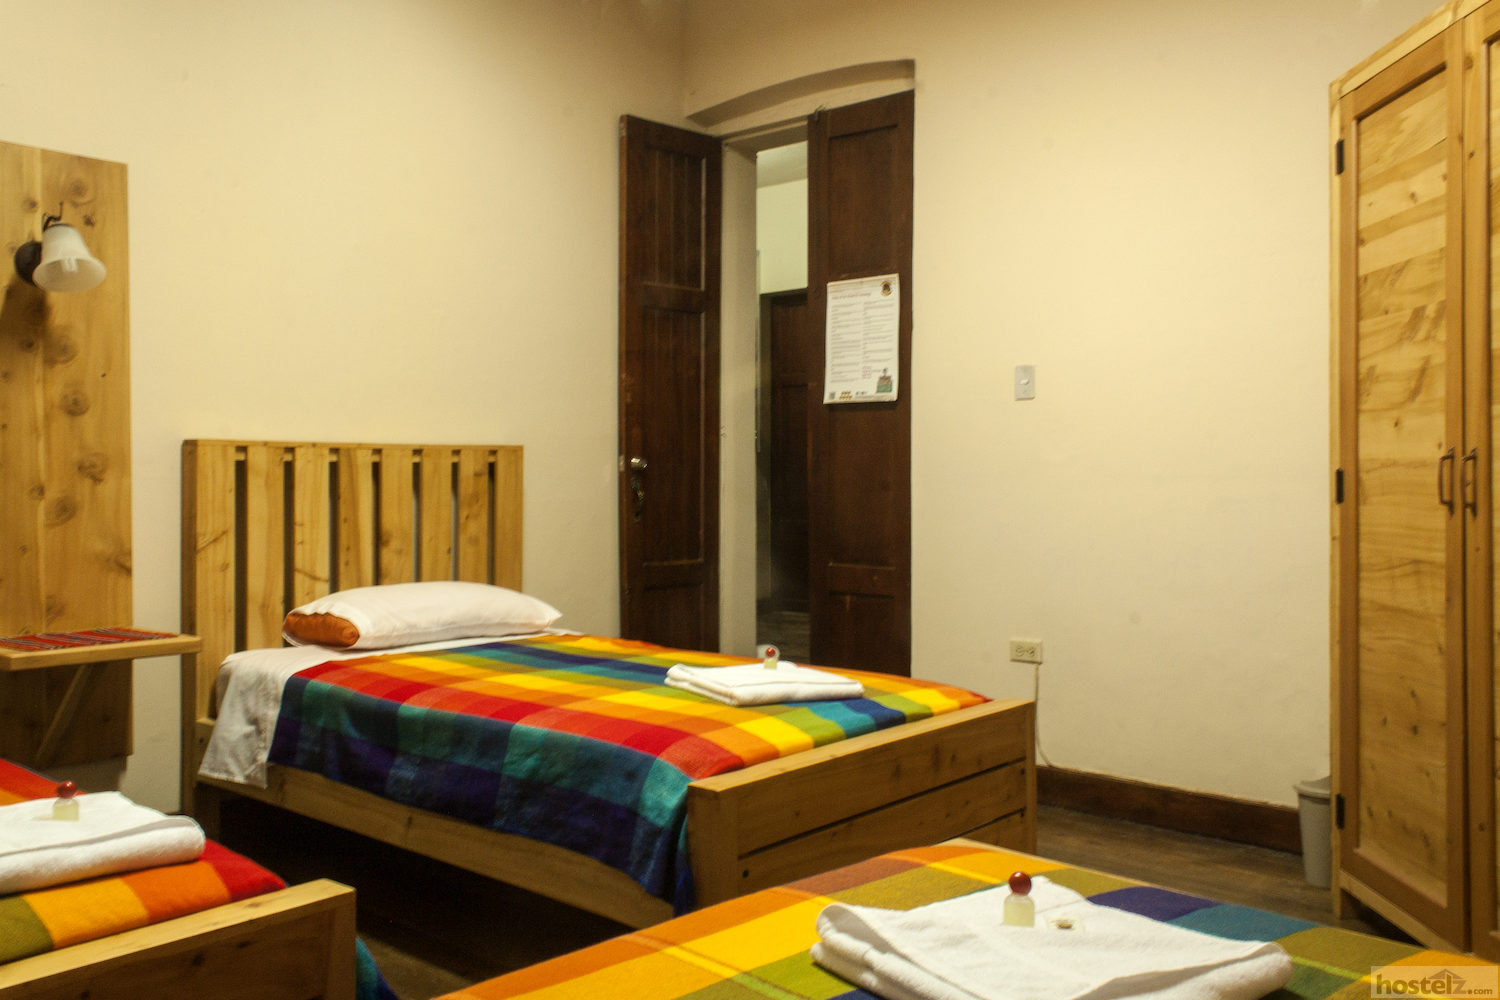 Three-bed dorm